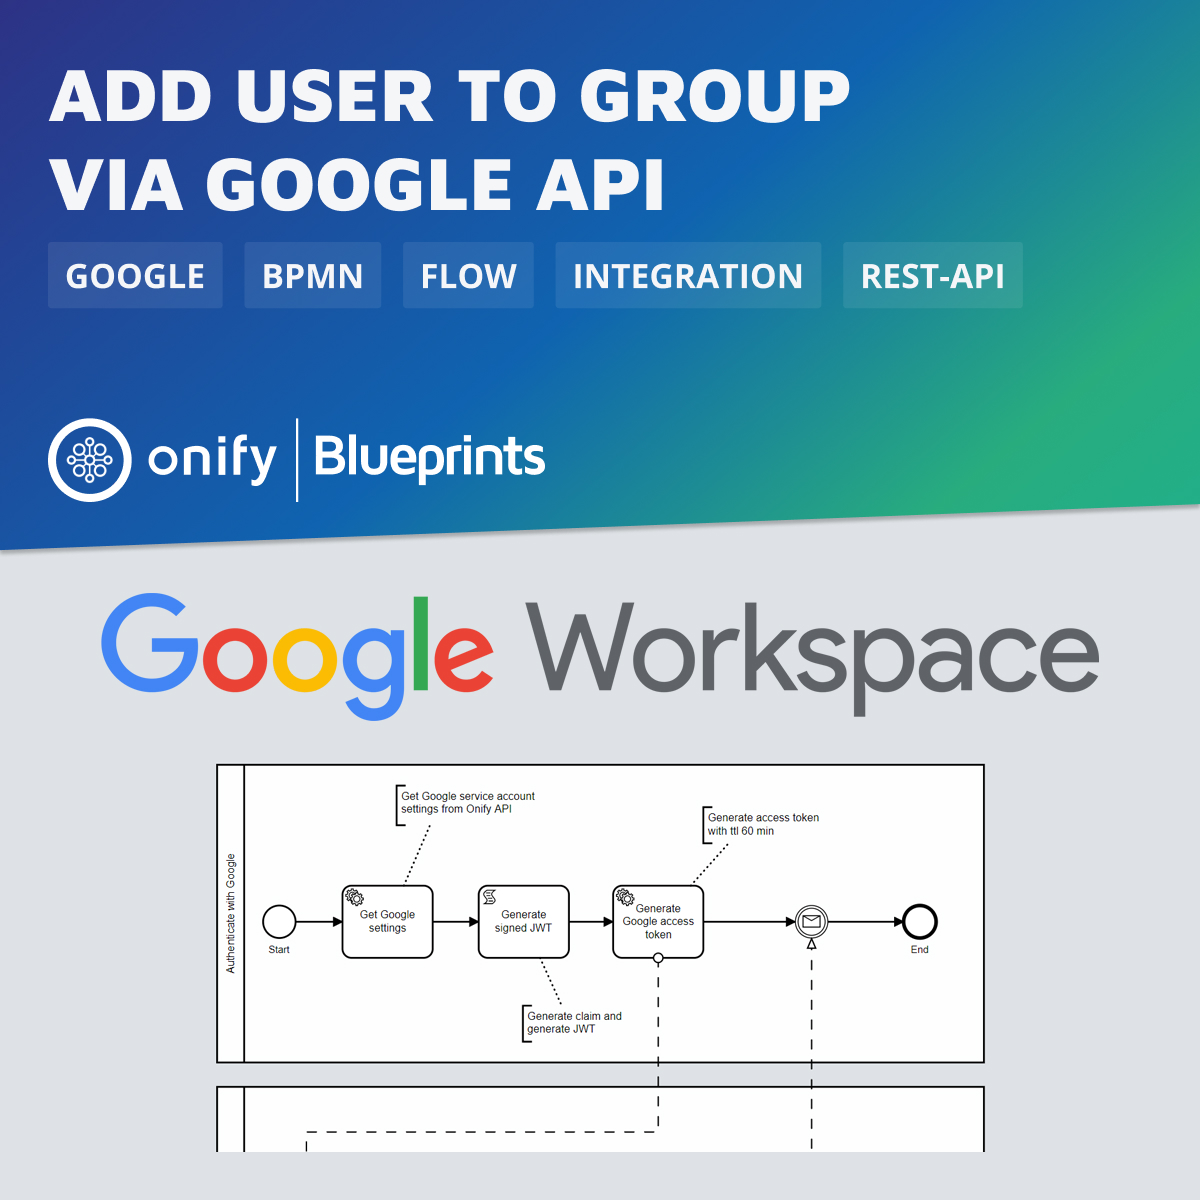 Onify Blueprint – Add user to group in Google via Google API